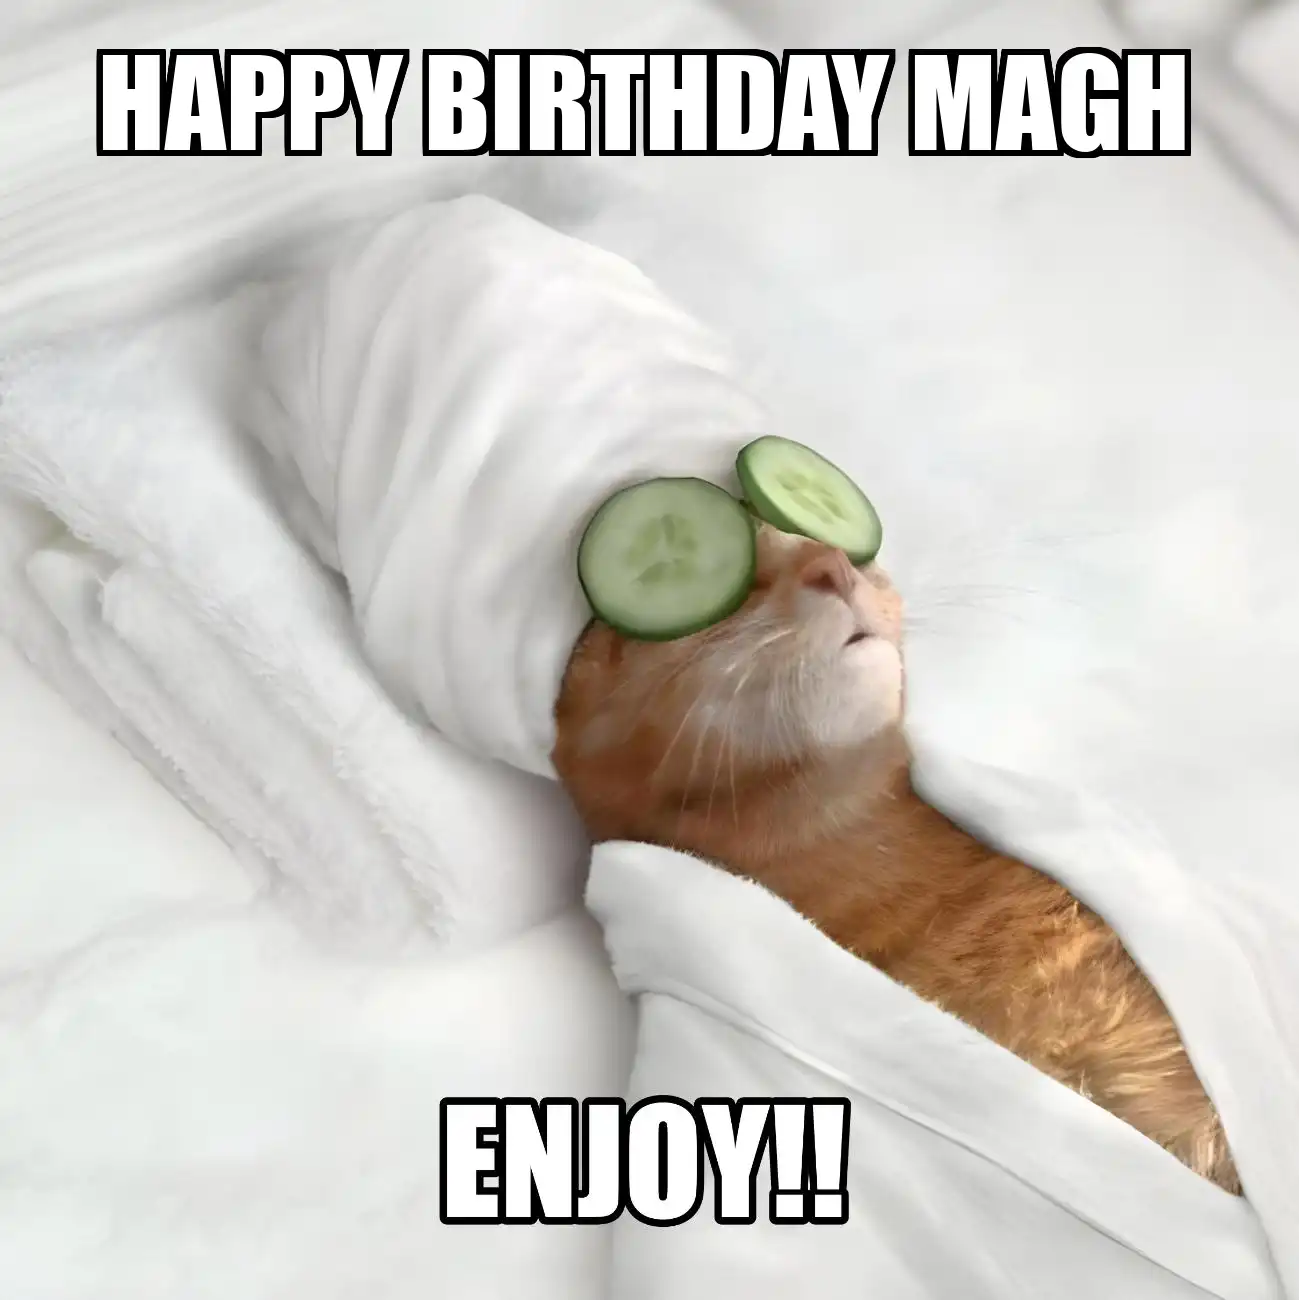 Happy Birthday Magh Enjoy Cat Meme